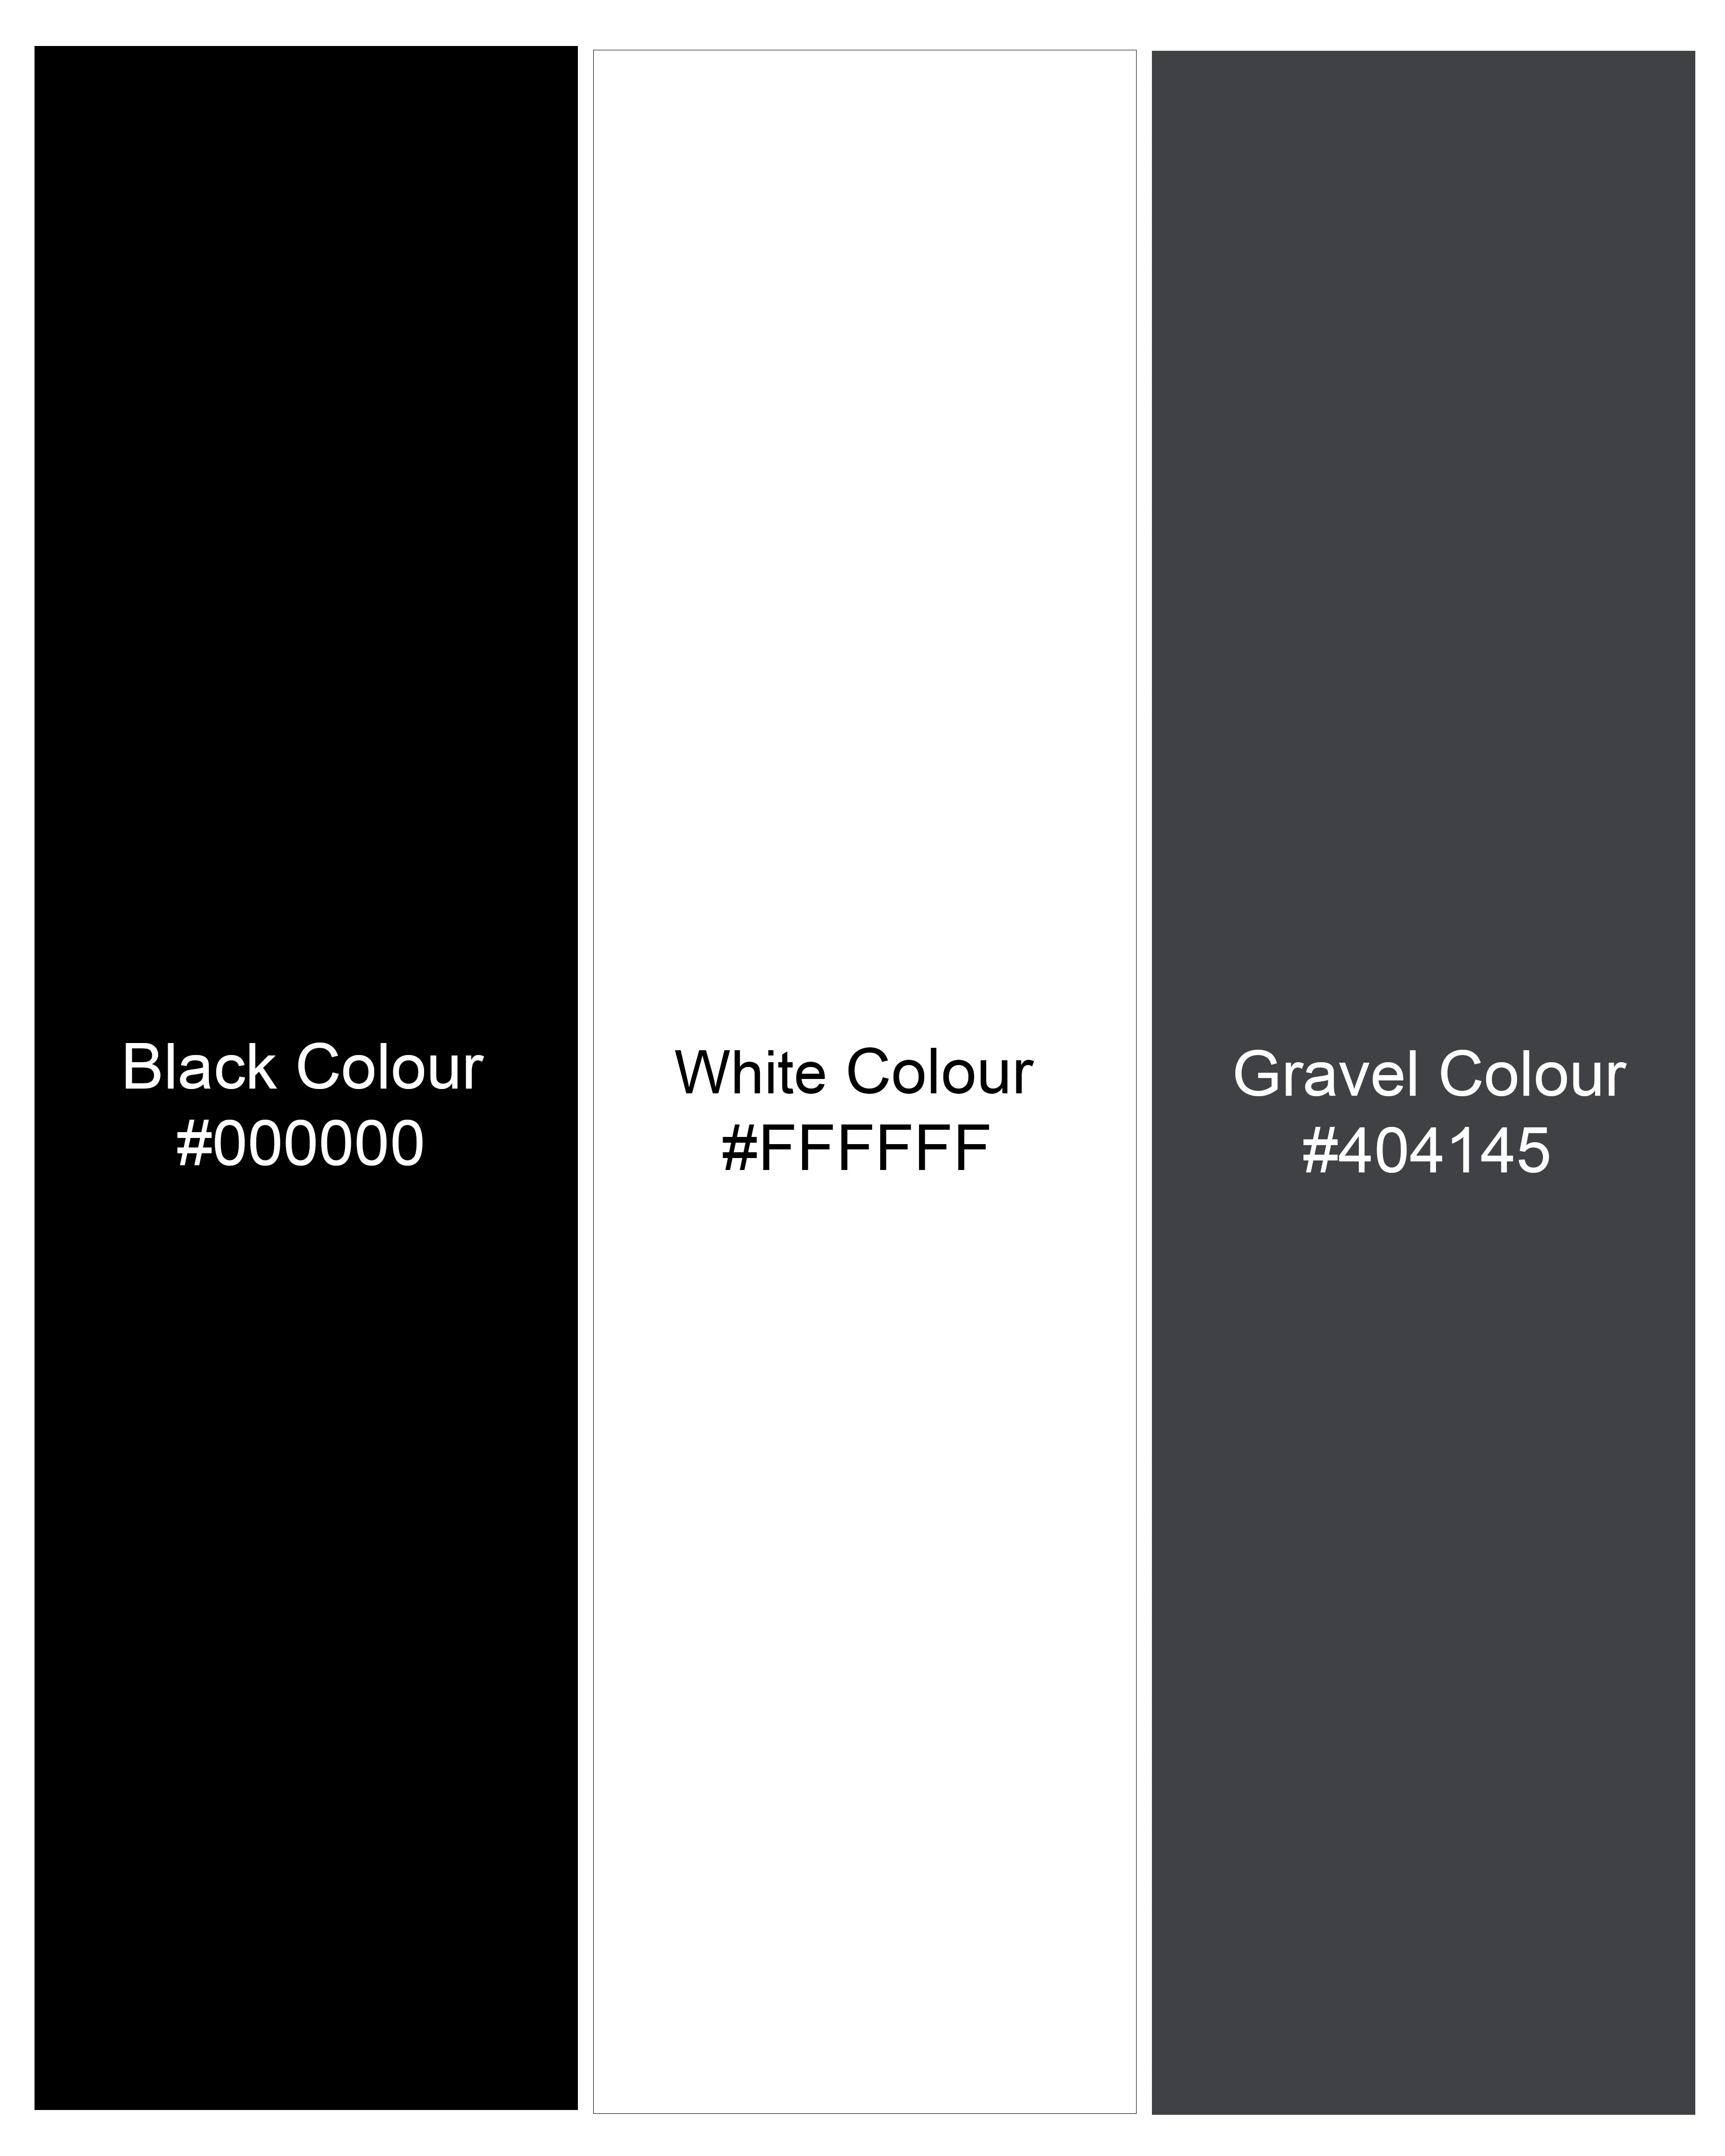 Jade Black with Gravel Gray Sanganeri Block Printed Royal Oxford Shirt  8743-BLK-38,8743-BLK-H-38,8743-BLK-39,8743-BLK-H-39,8743-BLK-40,8743-BLK-H-40,8743-BLK-42,8743-BLK-H-42,8743-BLK-44,8743-BLK-H-44,8743-BLK-46,8743-BLK-H-46,8743-BLK-48,8743-BLK-H-48,8743-BLK-50,8743-BLK-H-50,8743-BLK-52,8743-BLK-H-52